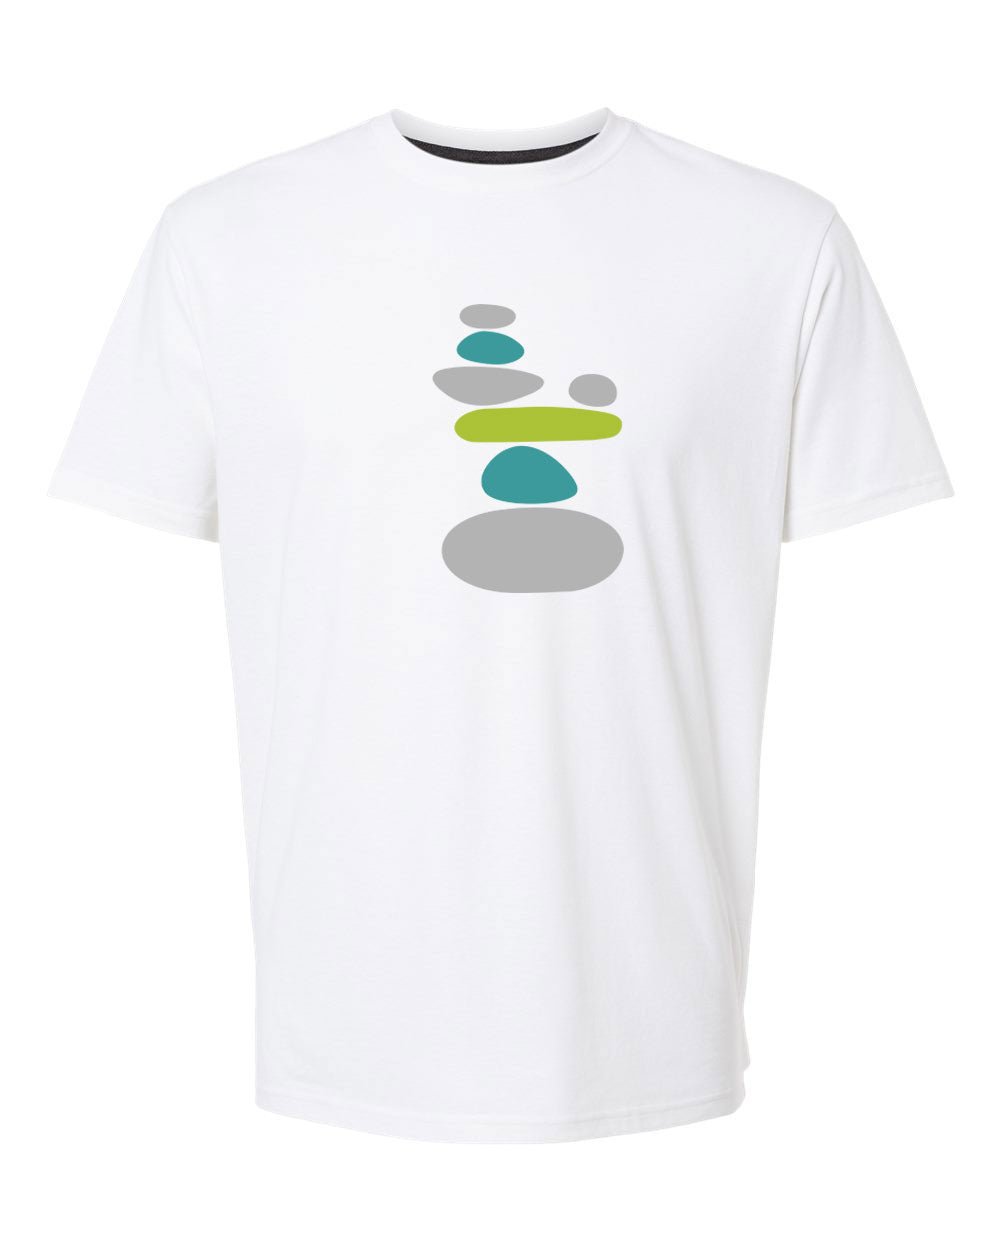 Eco-Zen Cairn Rocks Men's T-Shirt - Shirts & Tops S